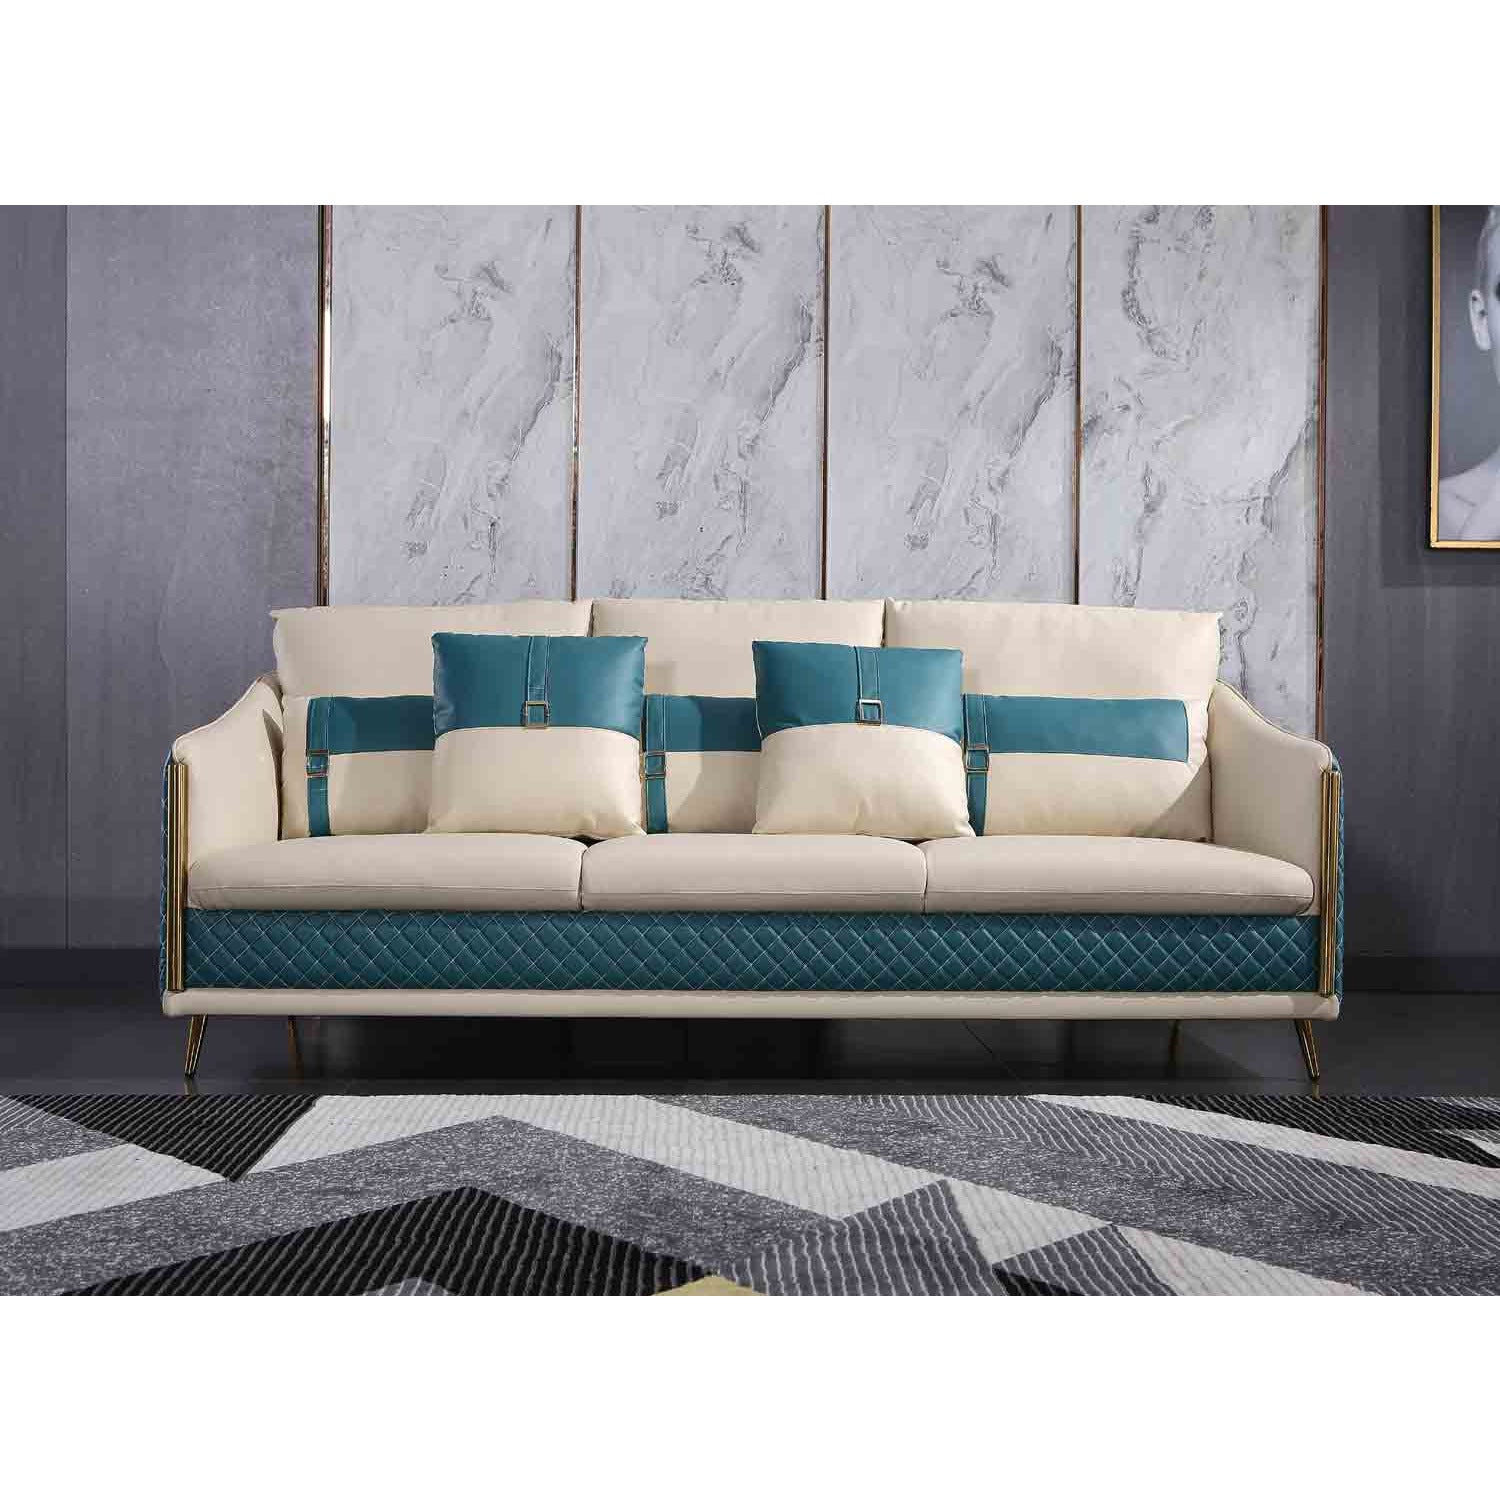 European Furniture - Icaro 3 Piece Living Room Set in Off White-Blue - 64457-3SET - New Star Living